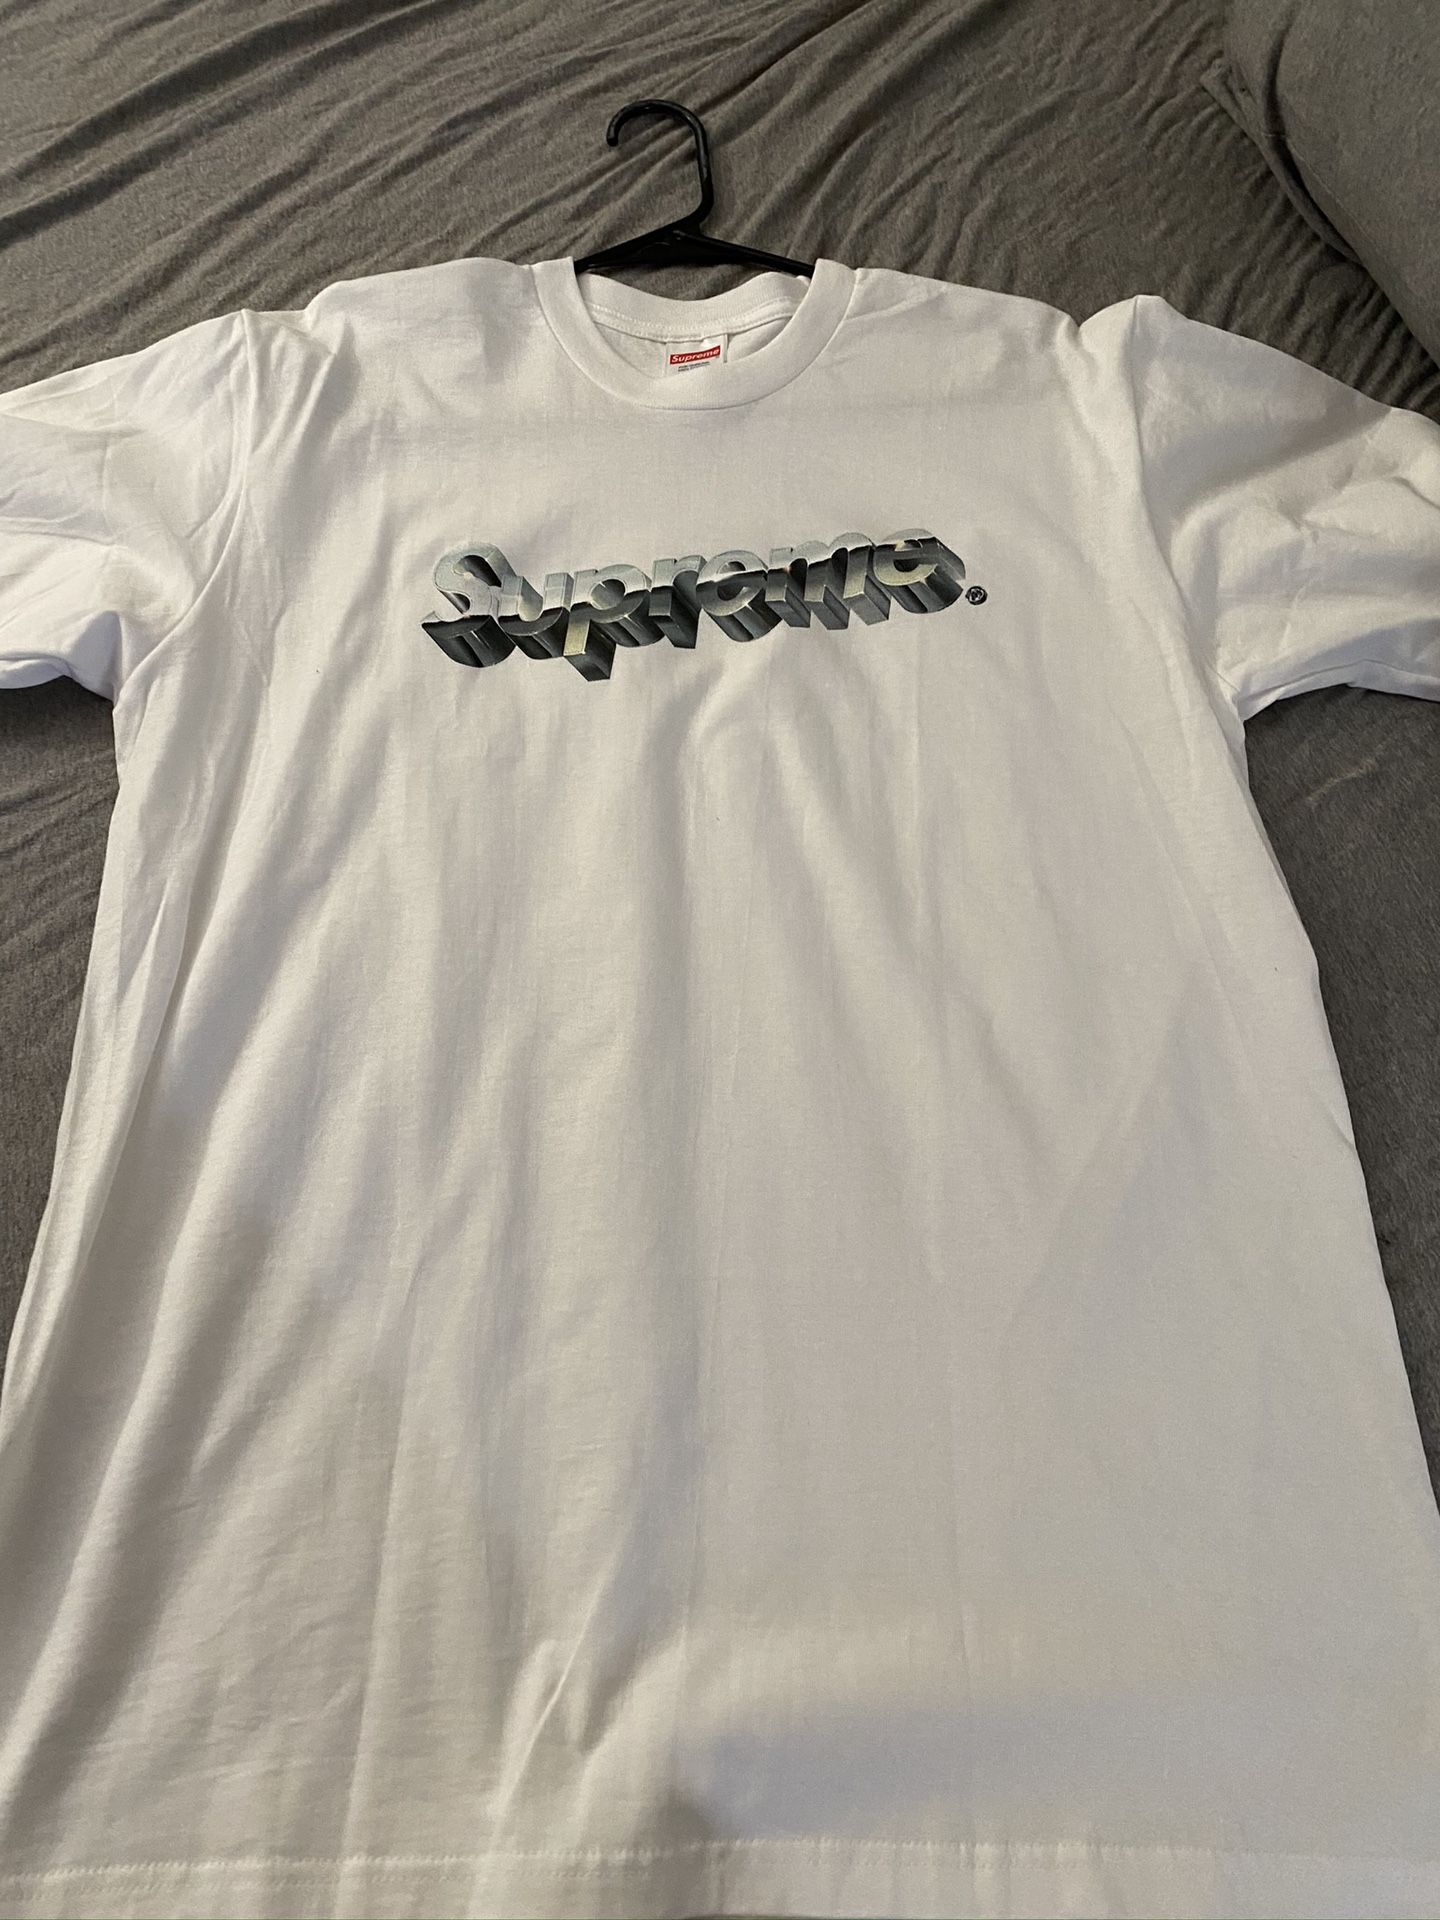 Chrome logo supreme shirt